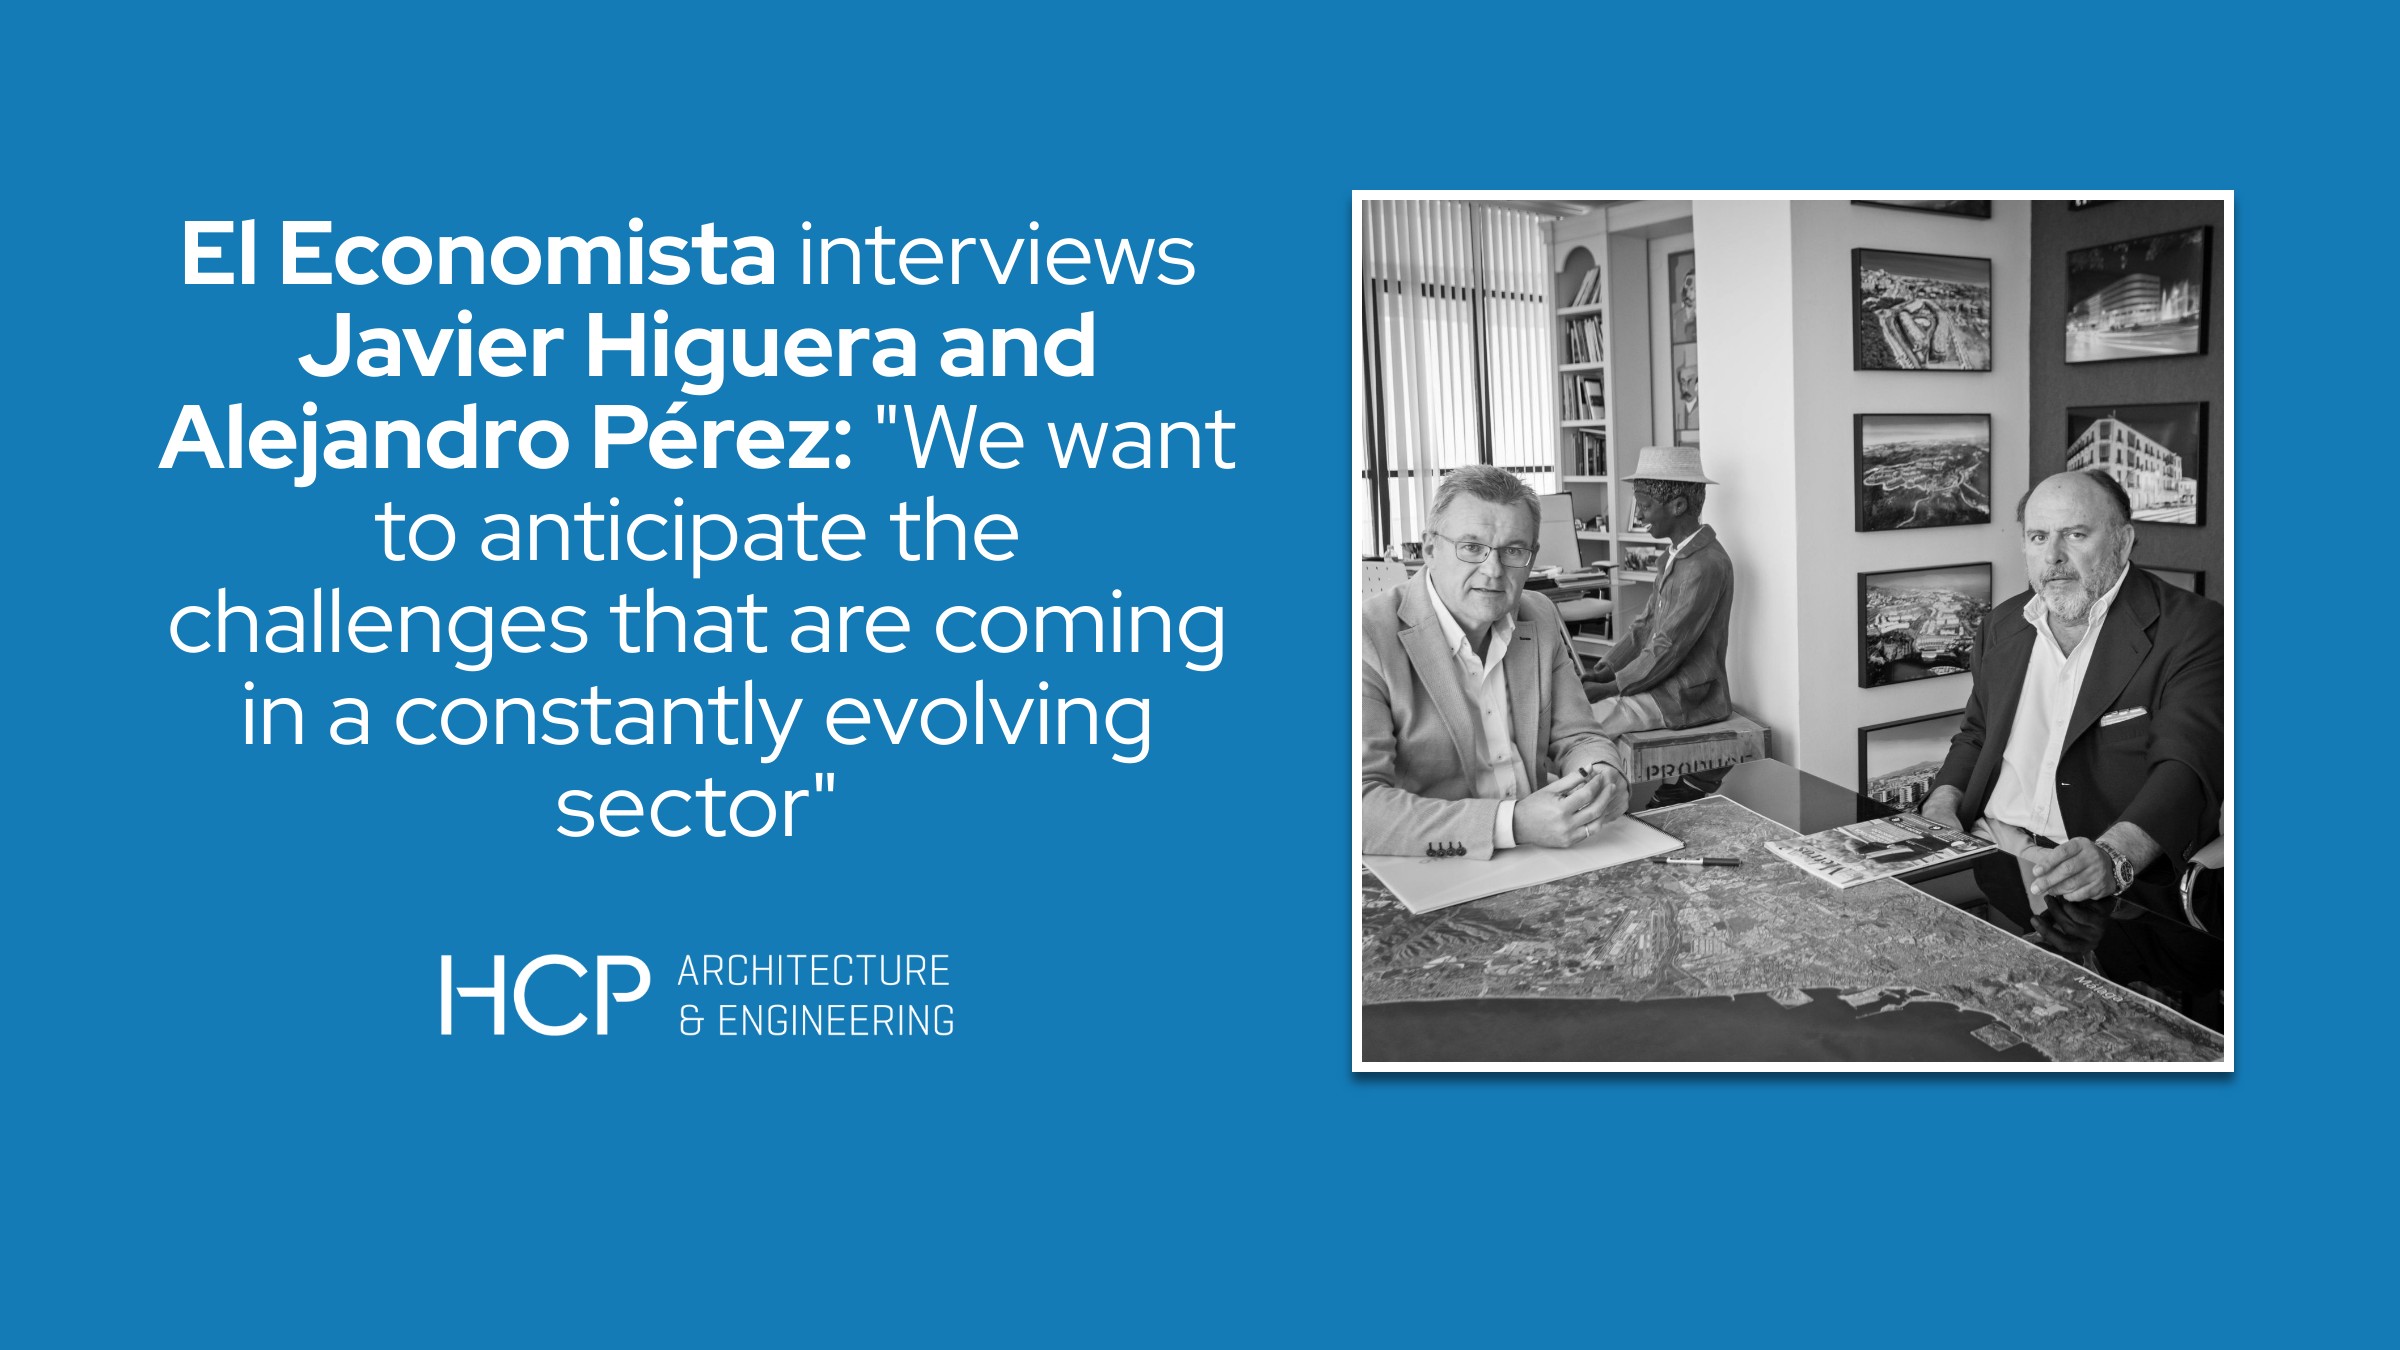 El Economista interviews Javier Higuera and Alejandro Pérez, from HCP Architecture & Engineering